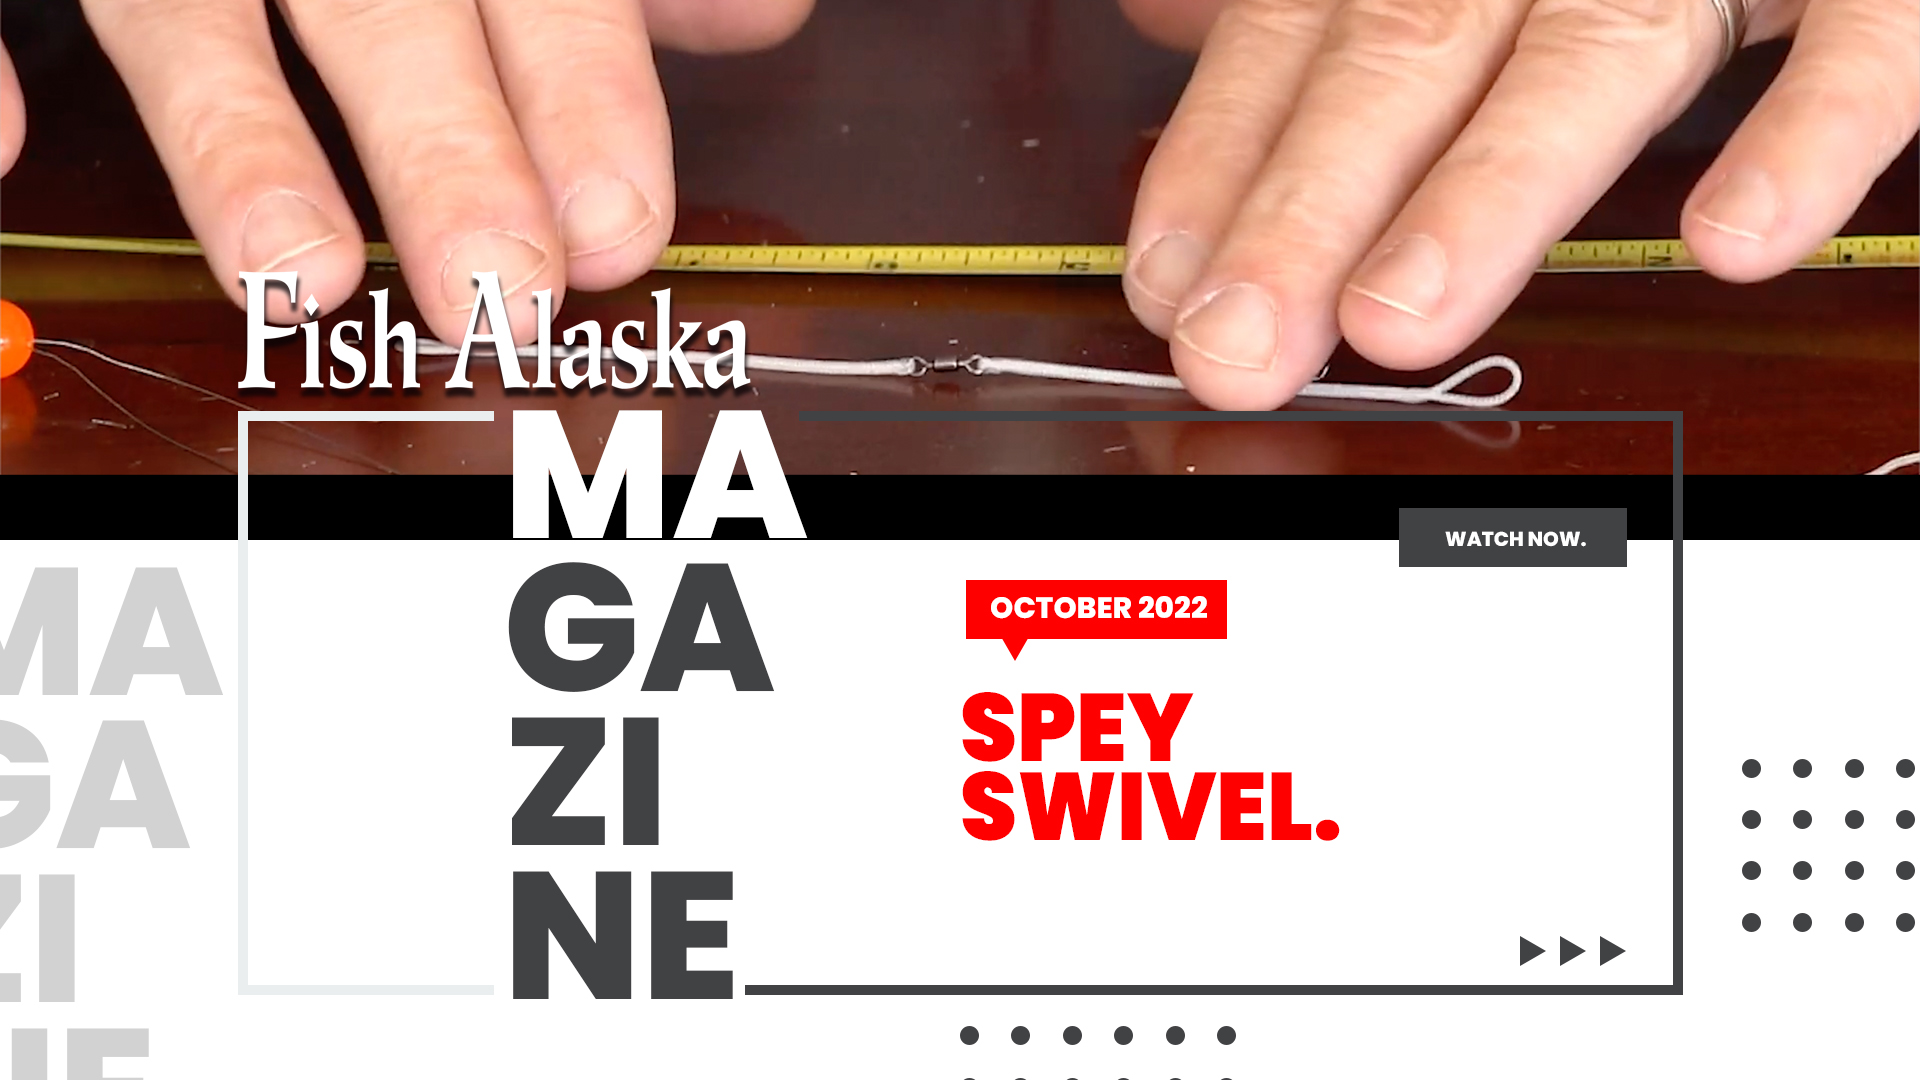 Making Spey Swivels - Fish Alaska Magazine